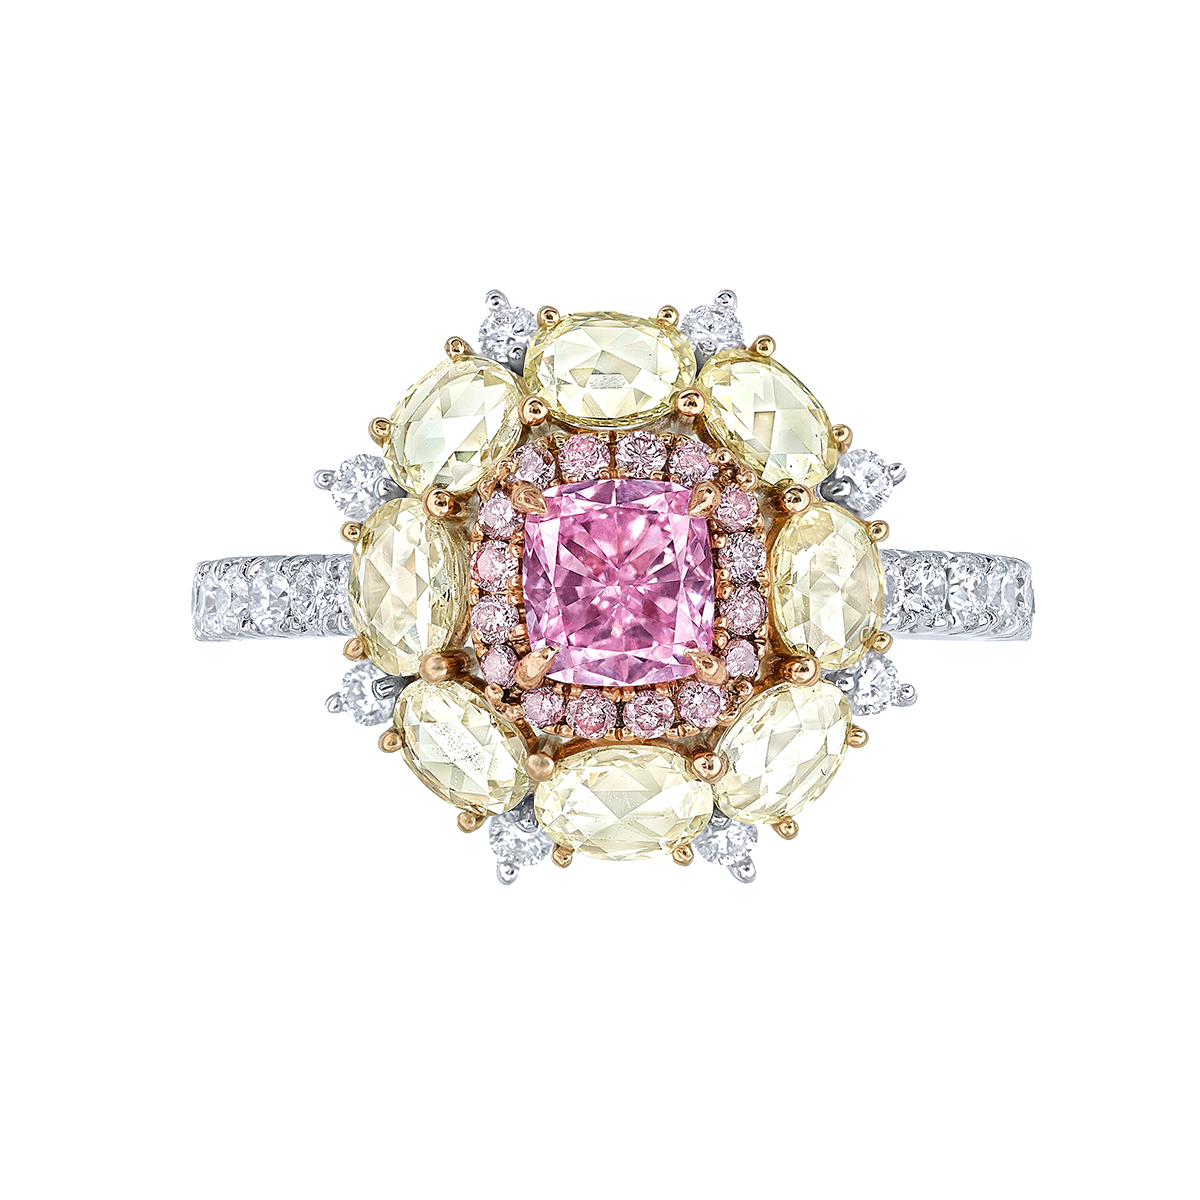 GIA 0.52克拉 粉紫鑽鑽戒
Fancy Pink -Purple Colored
Diamond and Diamond Ring